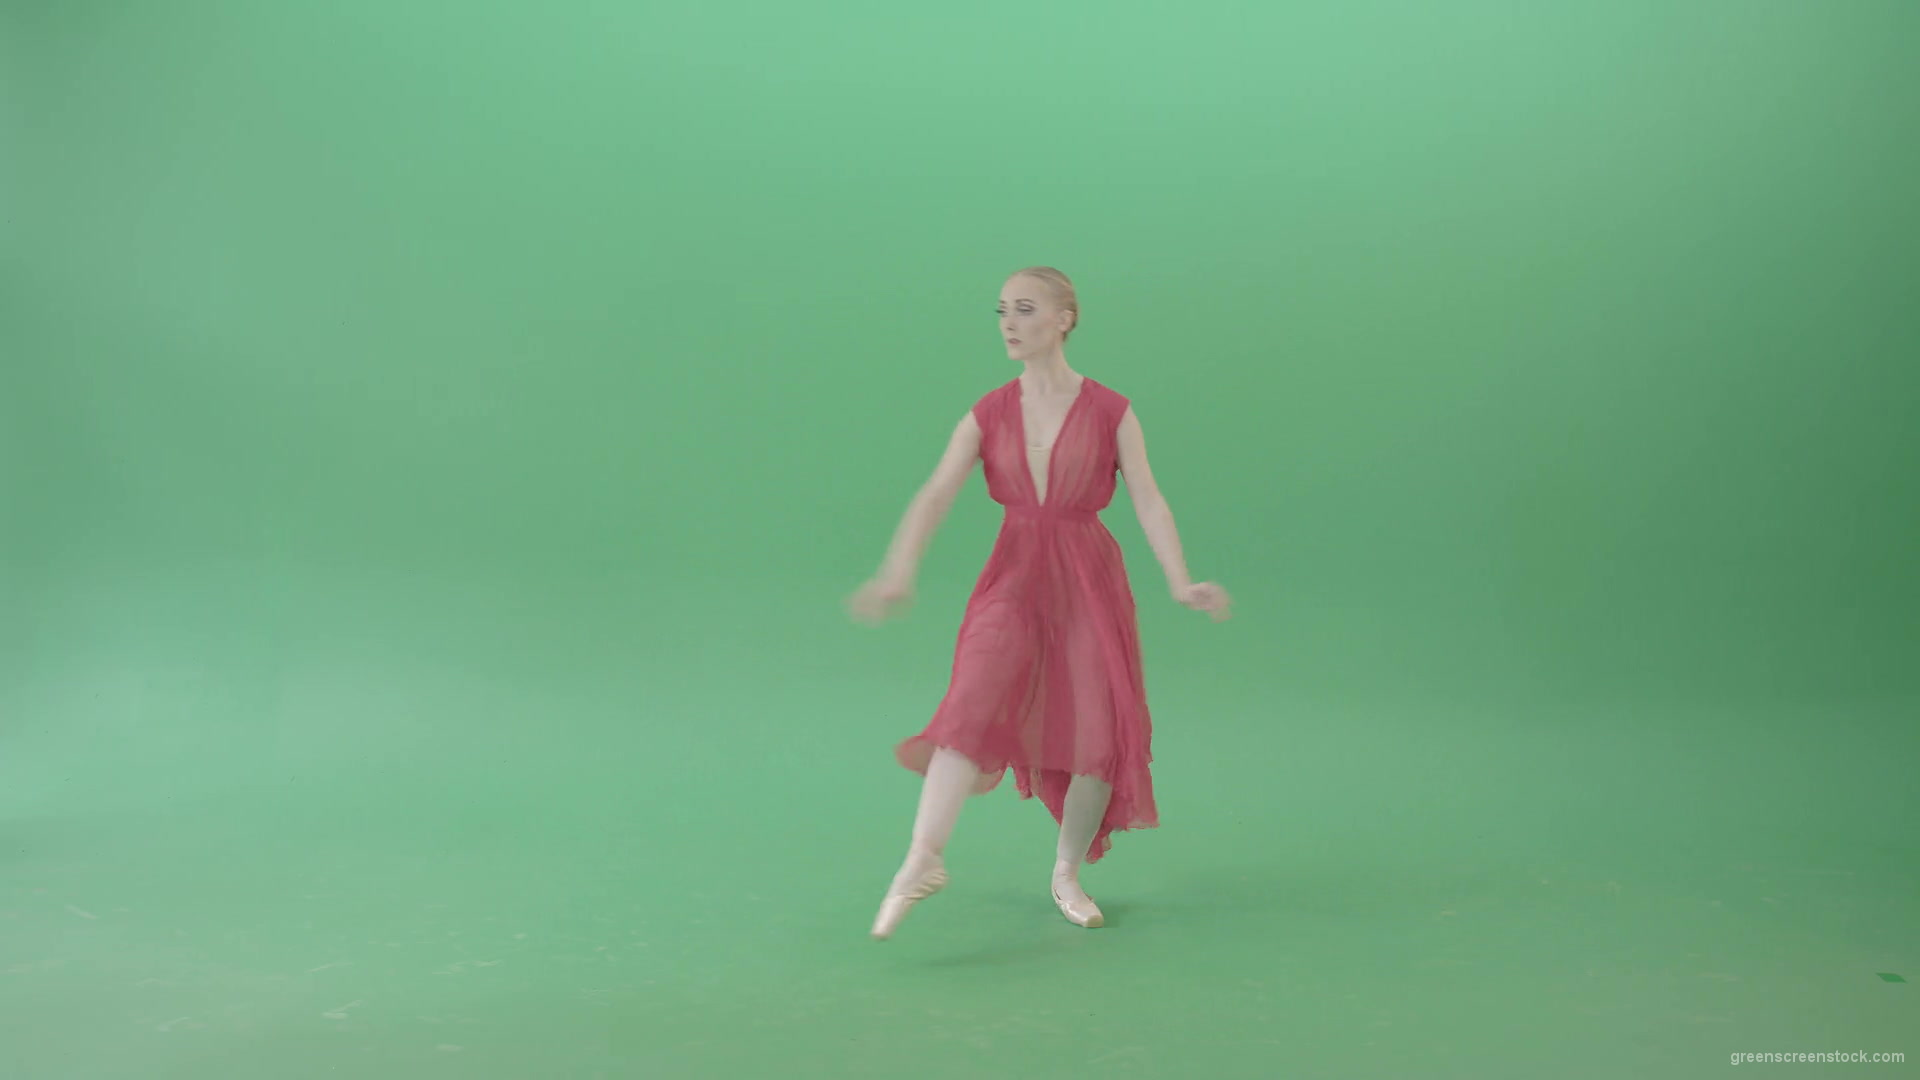 Light-Ballet-dancing-girl-in-red-wind-dress-spinning-on-green-screen-4K-Video-Footage-1920_008 Green Screen Stock